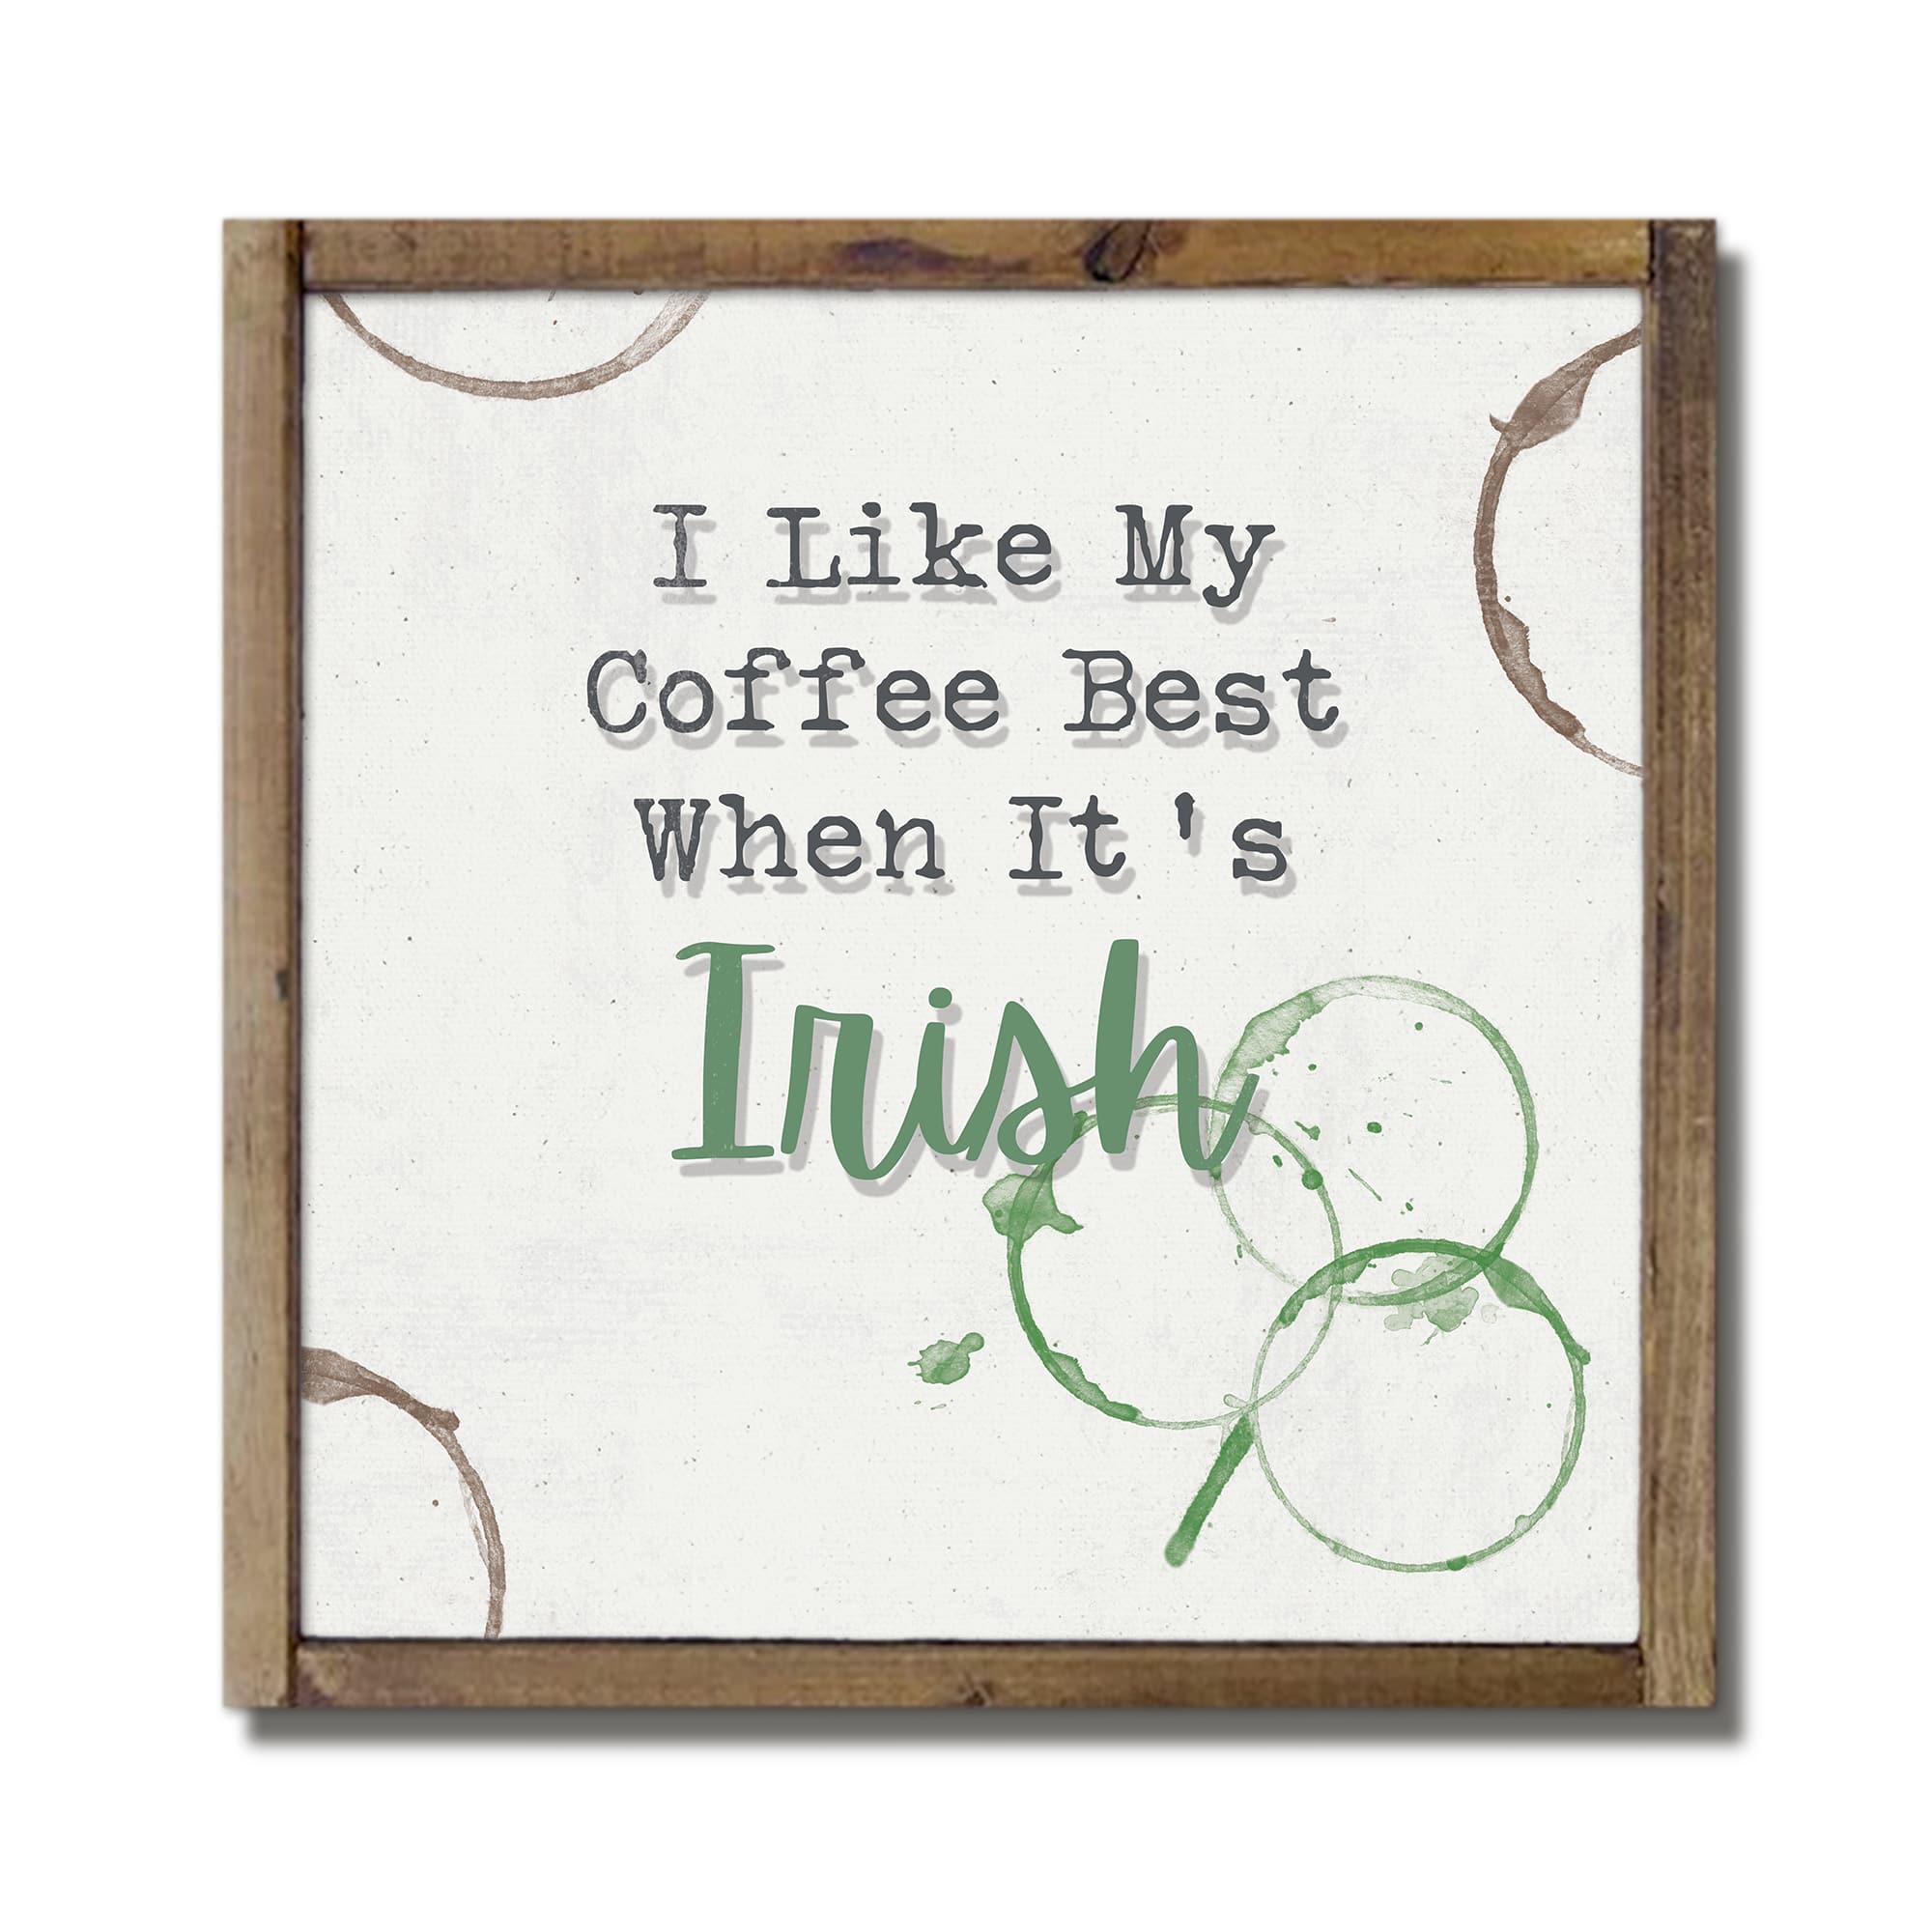 Irish Coffee is Best Framed Wood Plaque